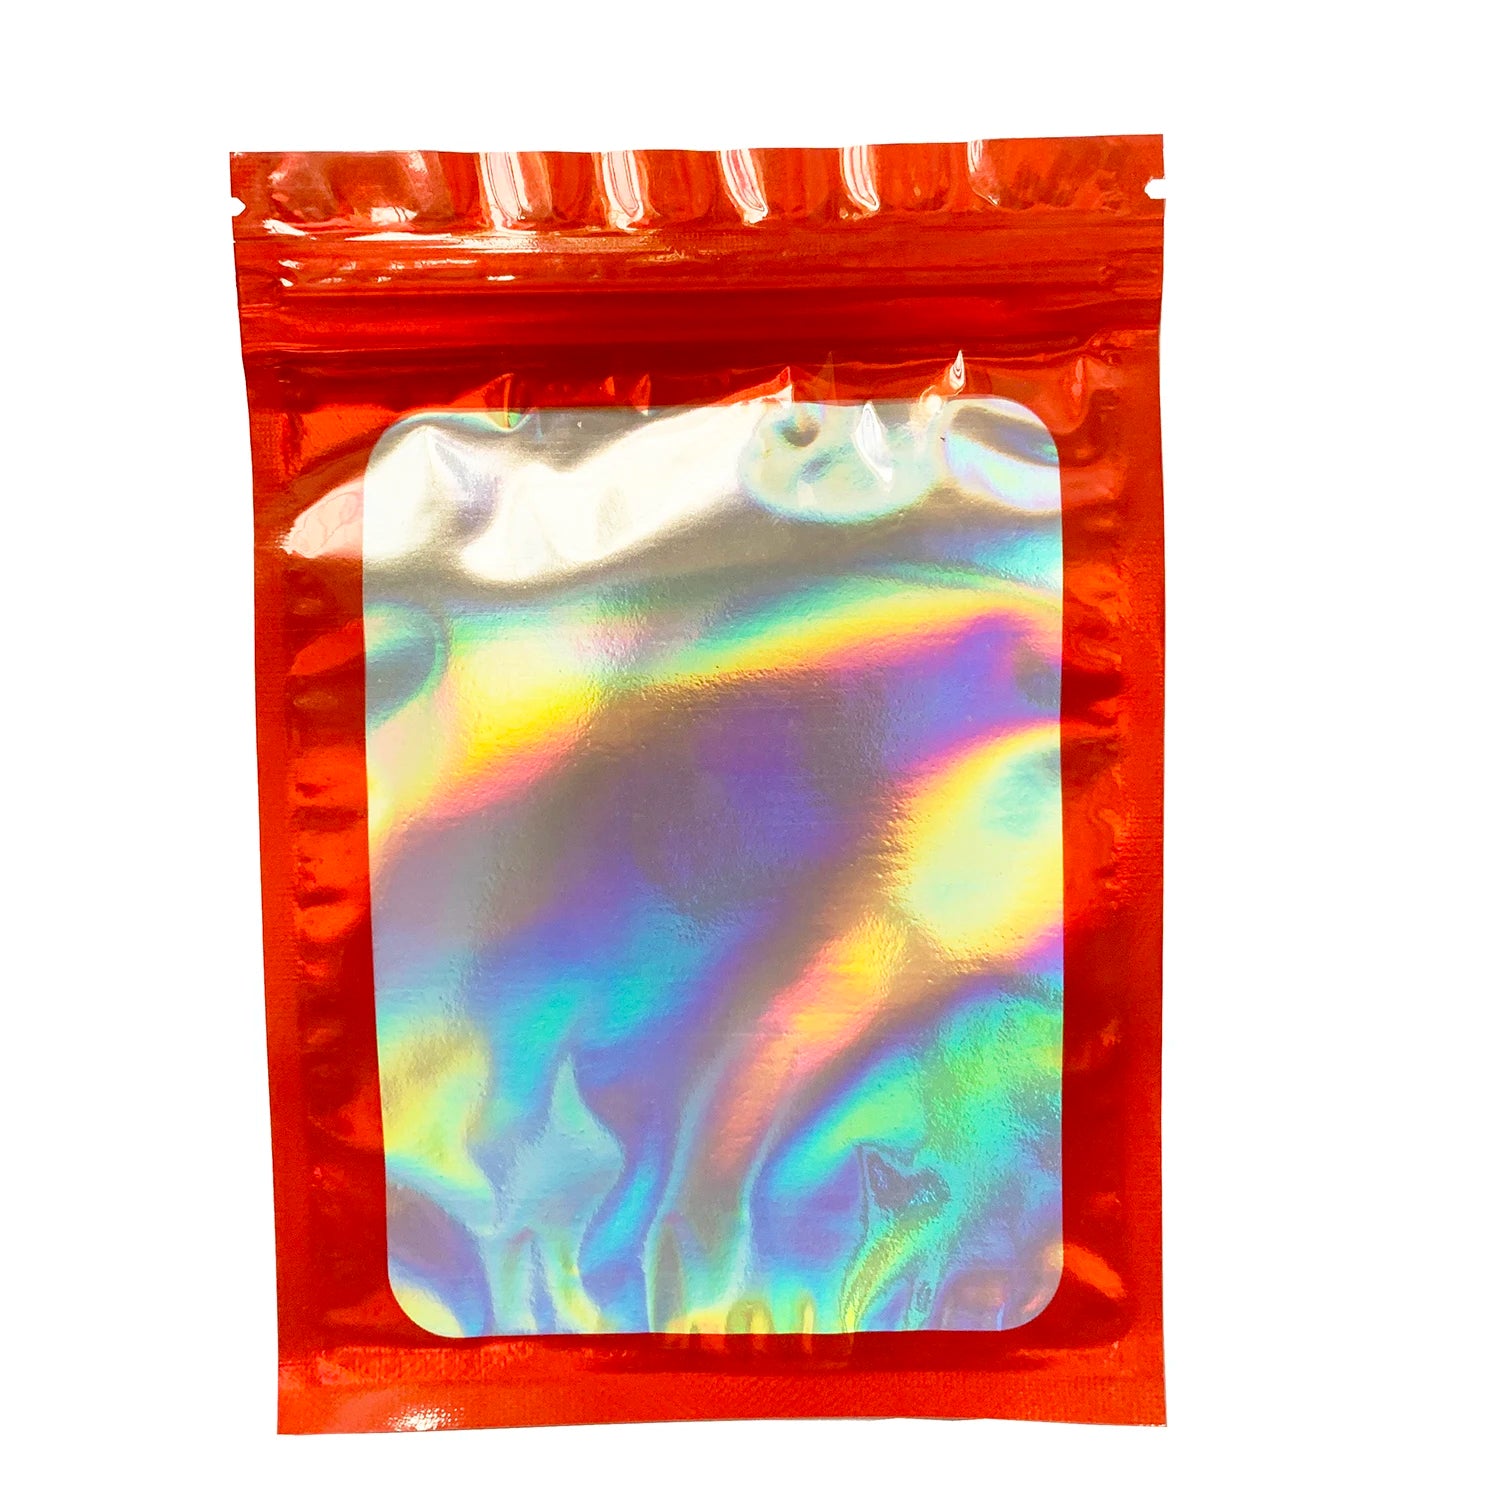 50pcSthick Geruch Proof Mylar Bags Holographische Laserfarbe Plastik Verpackung Beutel Schmuck Juwelengeschäfte Aufbewahrungsbeutel Geschenk Reißverschluss Schloss Tasche